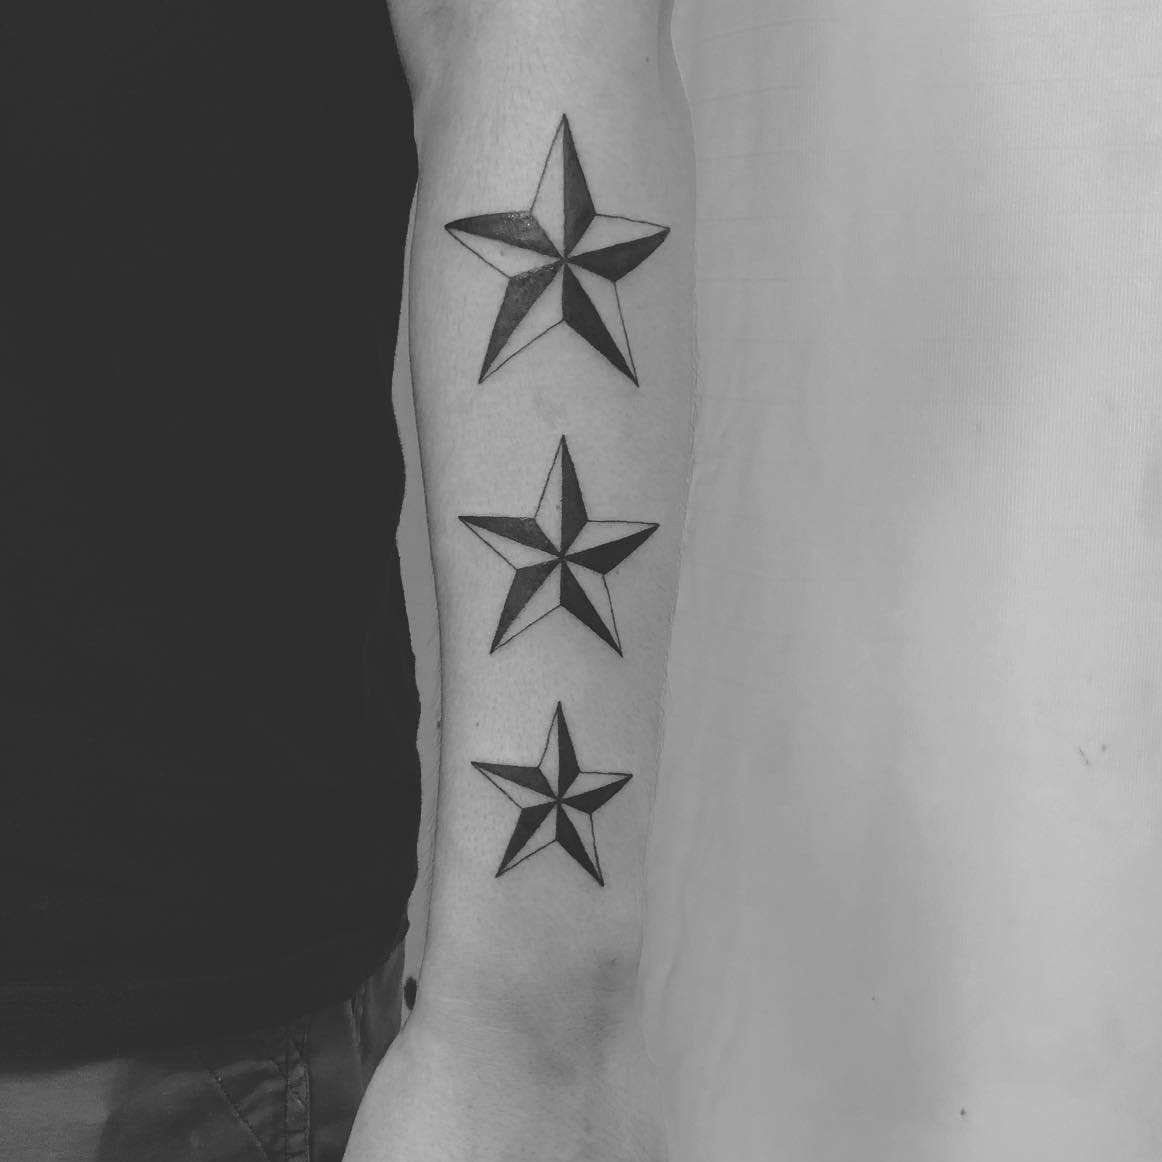 Minimalist north star tattoo in white ink